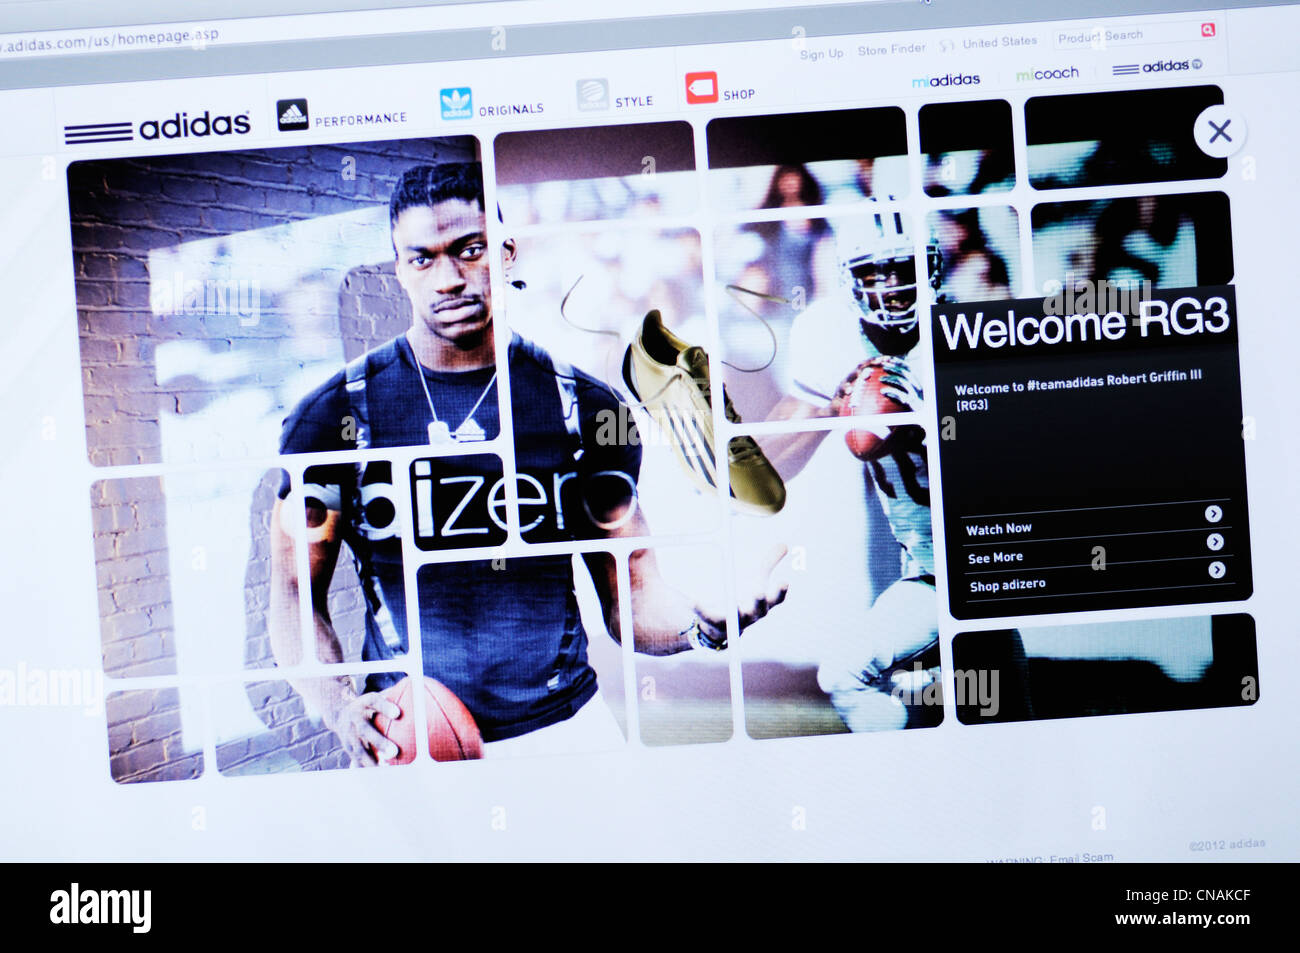 Adidas screenshot hi-res stock photography and images - Alamy